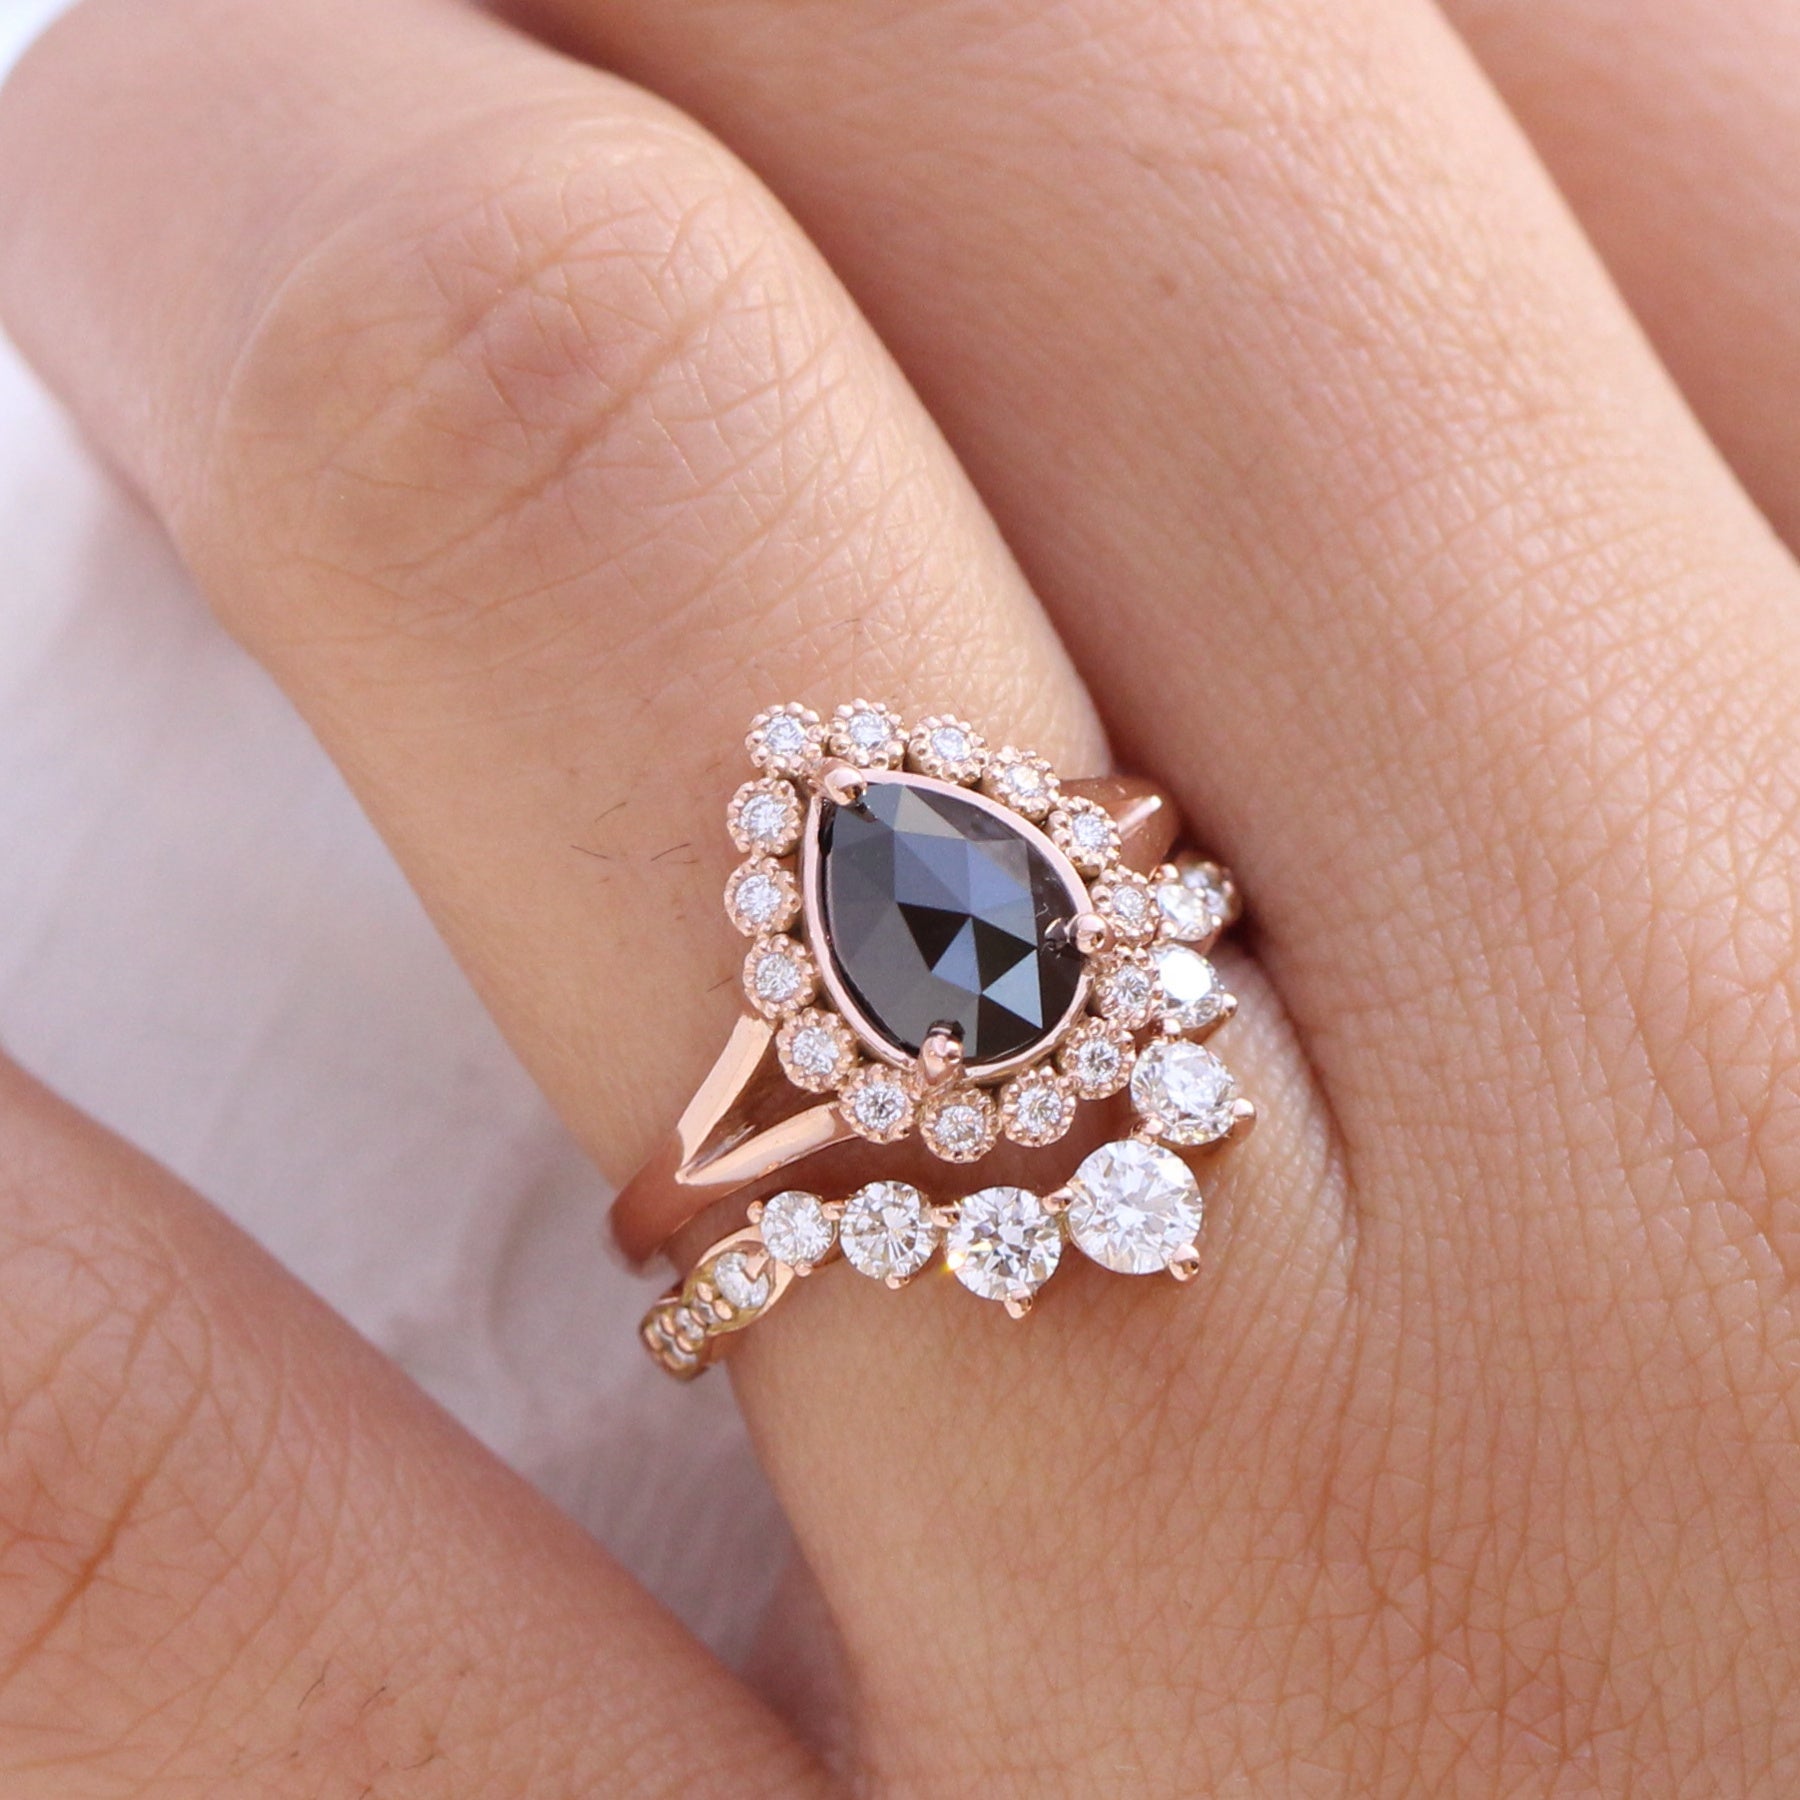 Vintage halo black diamond engagement ring rose gold large 7 diamond u wedding band la more design jewelry